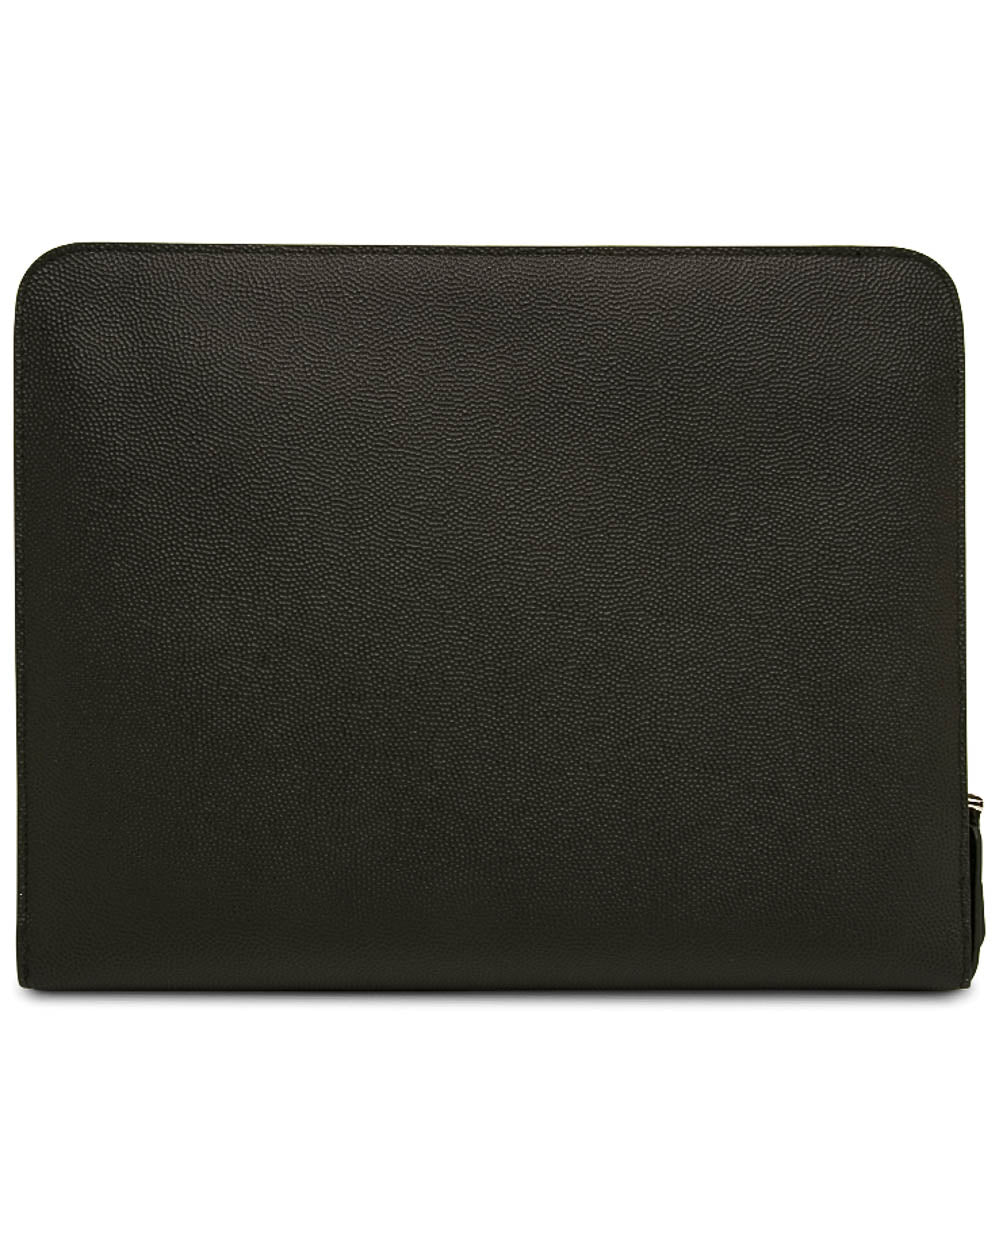 Pebble Grain Leather Portfolio in Black